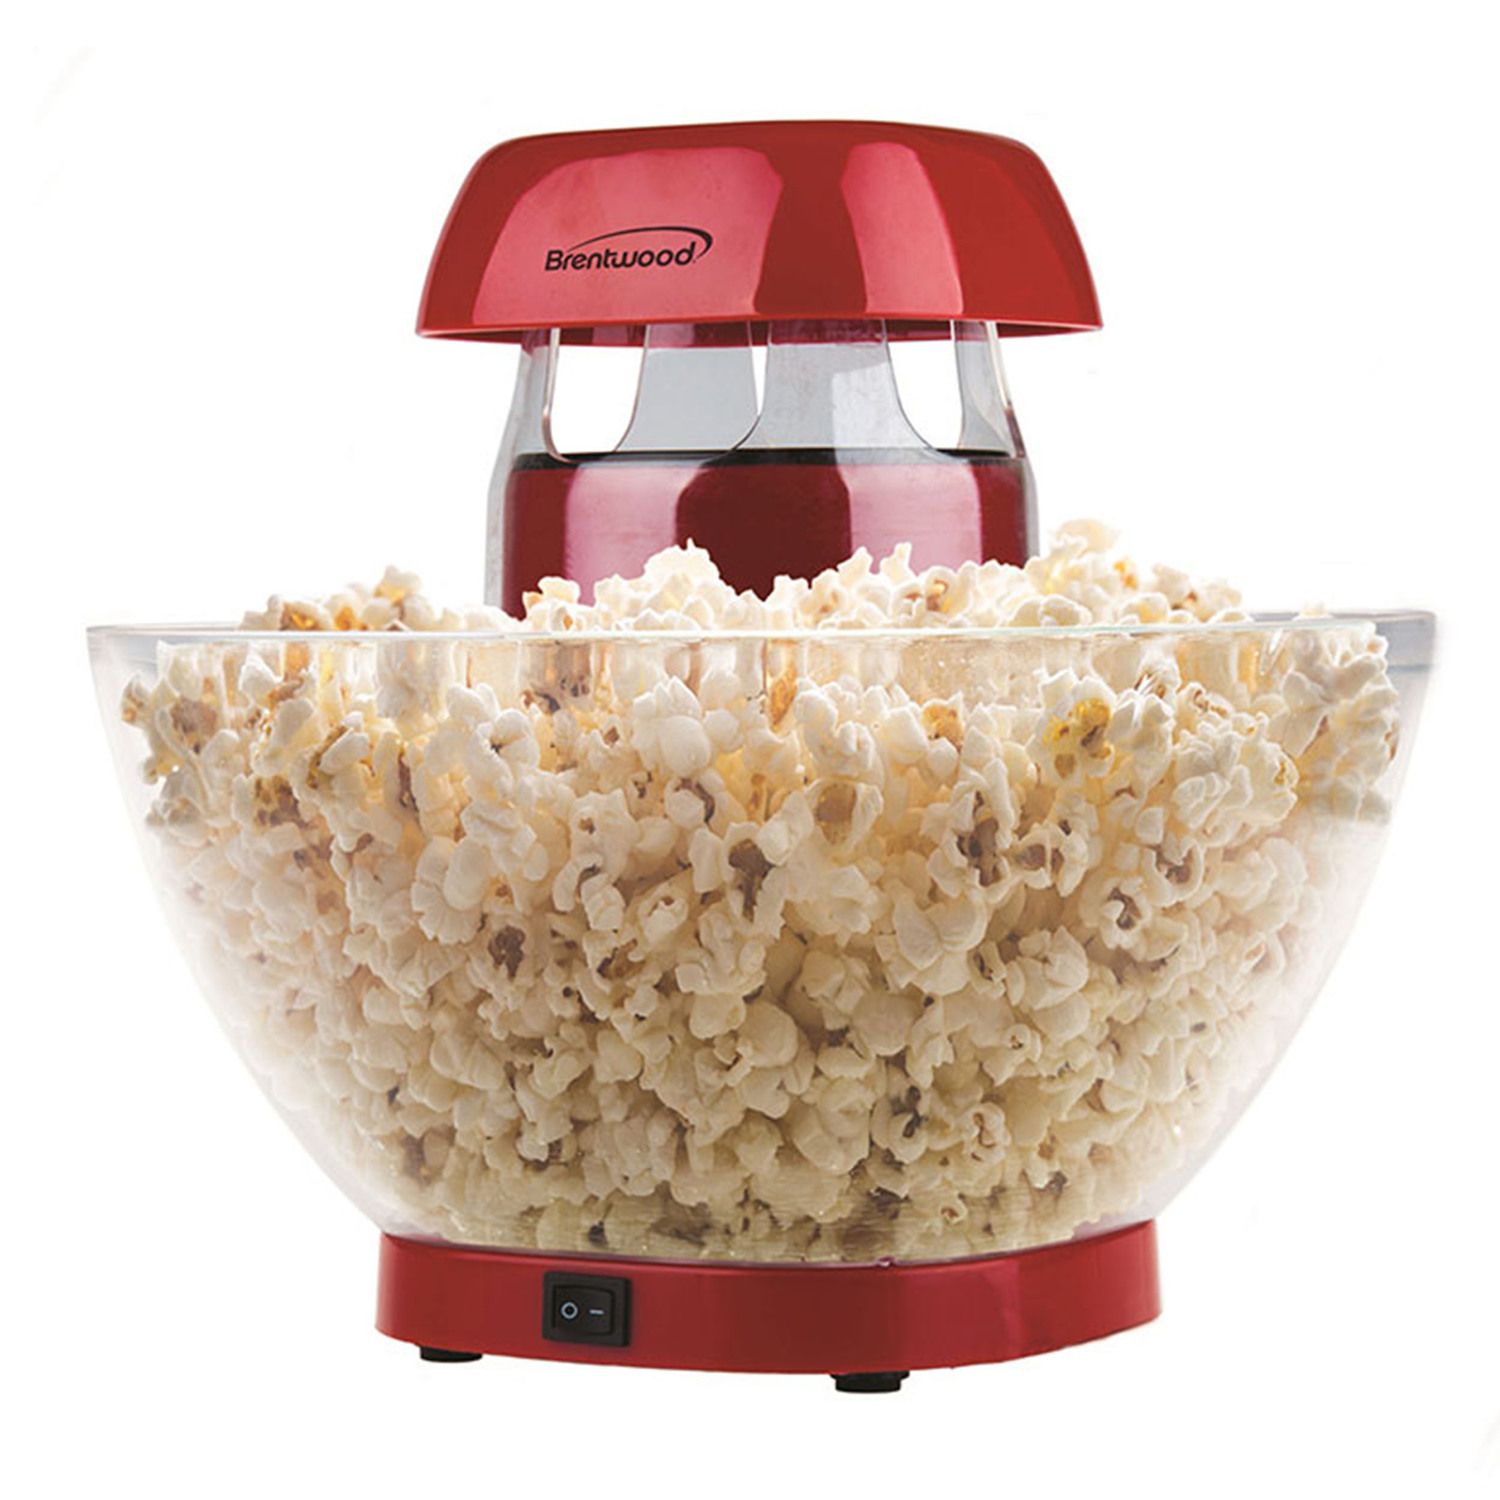 Dash SmartStore Stirring Popcorn Maker, 3QT